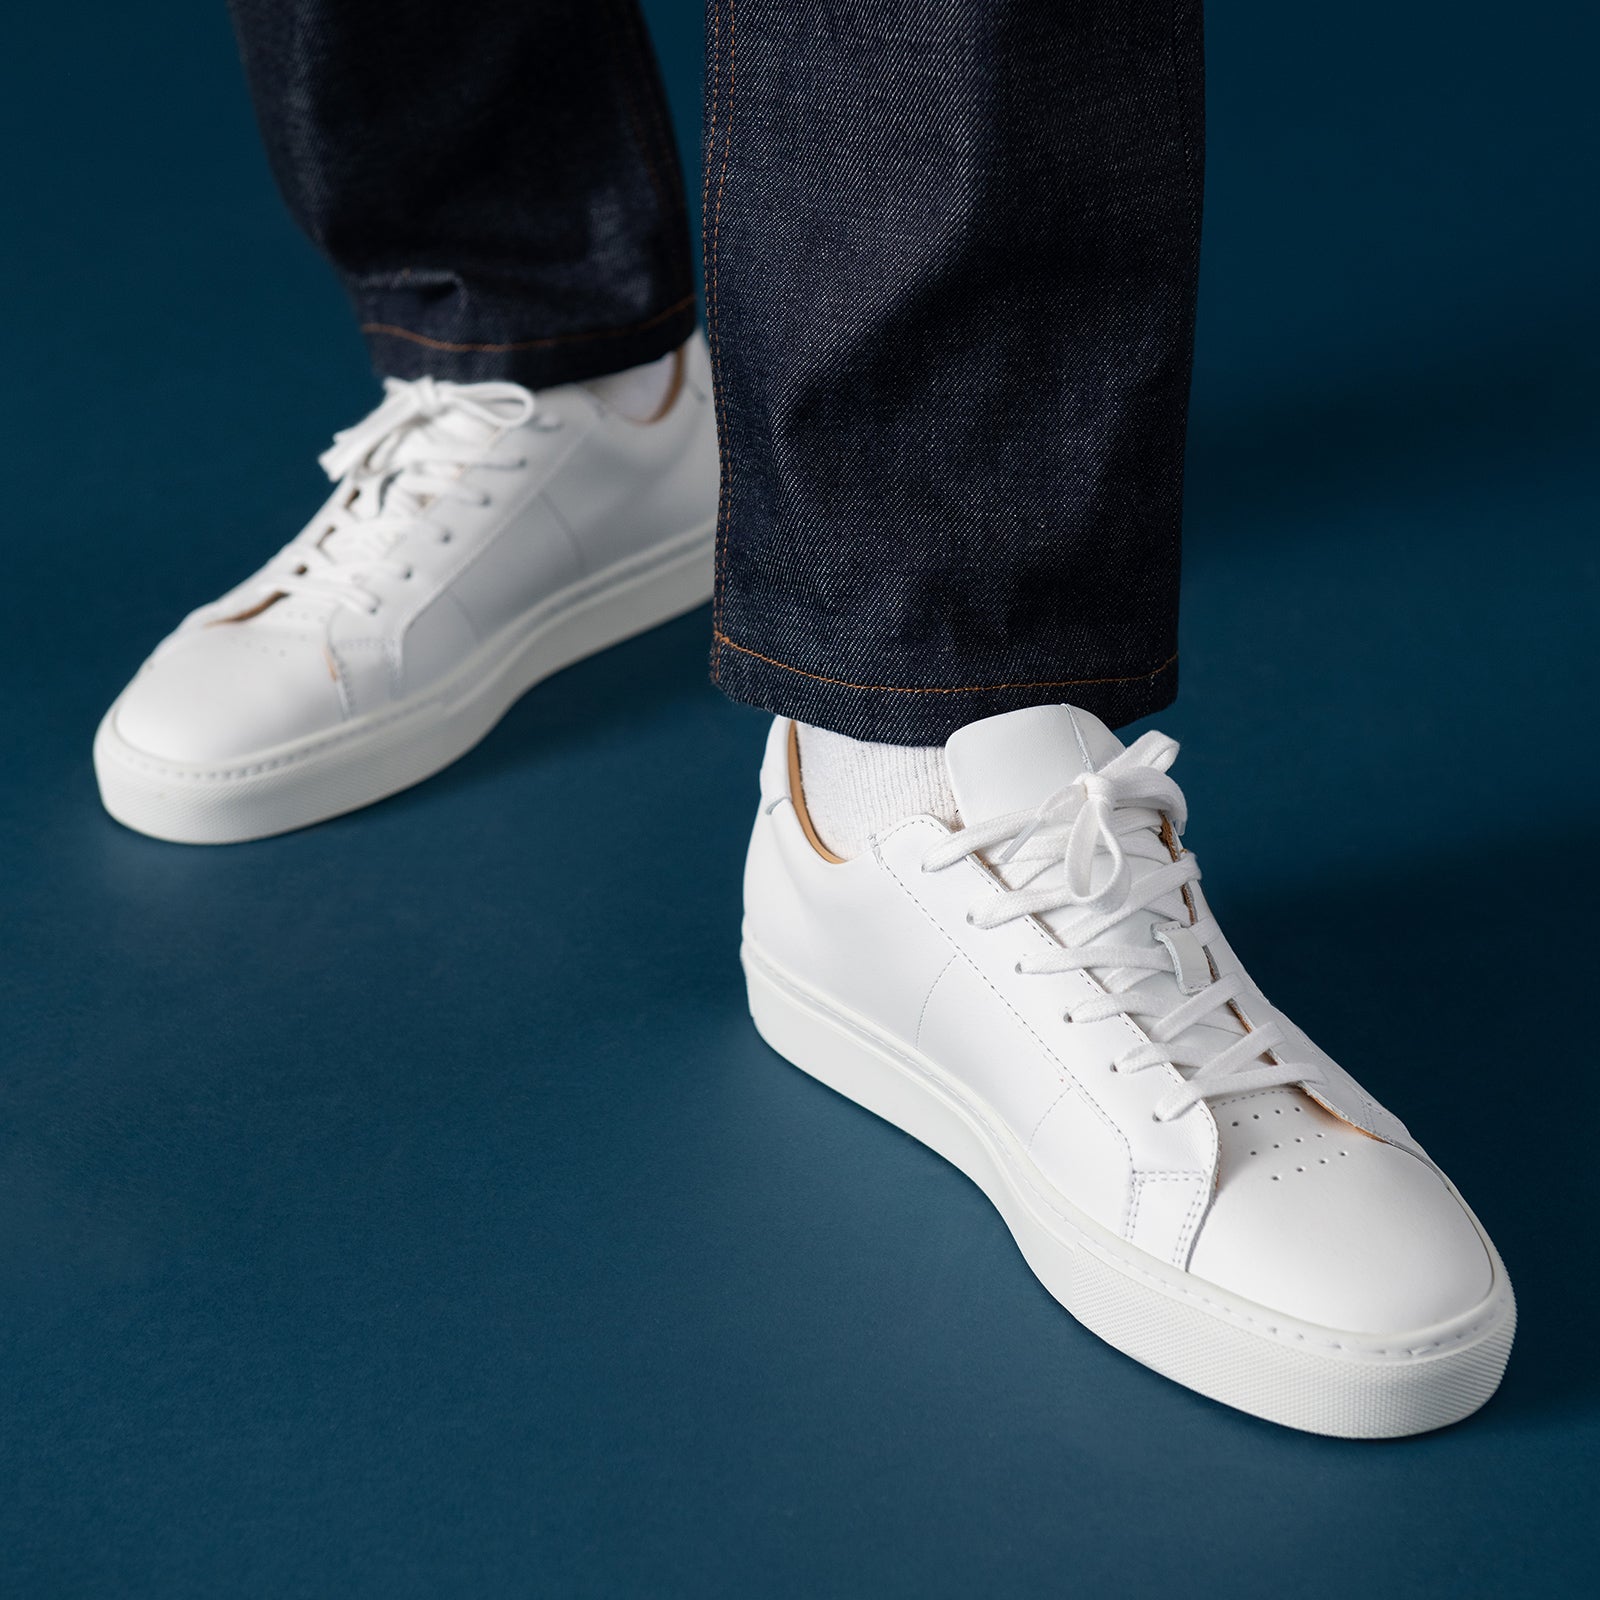 Greats - The Royale - Blanco White Italian Leather - Men's Shoe